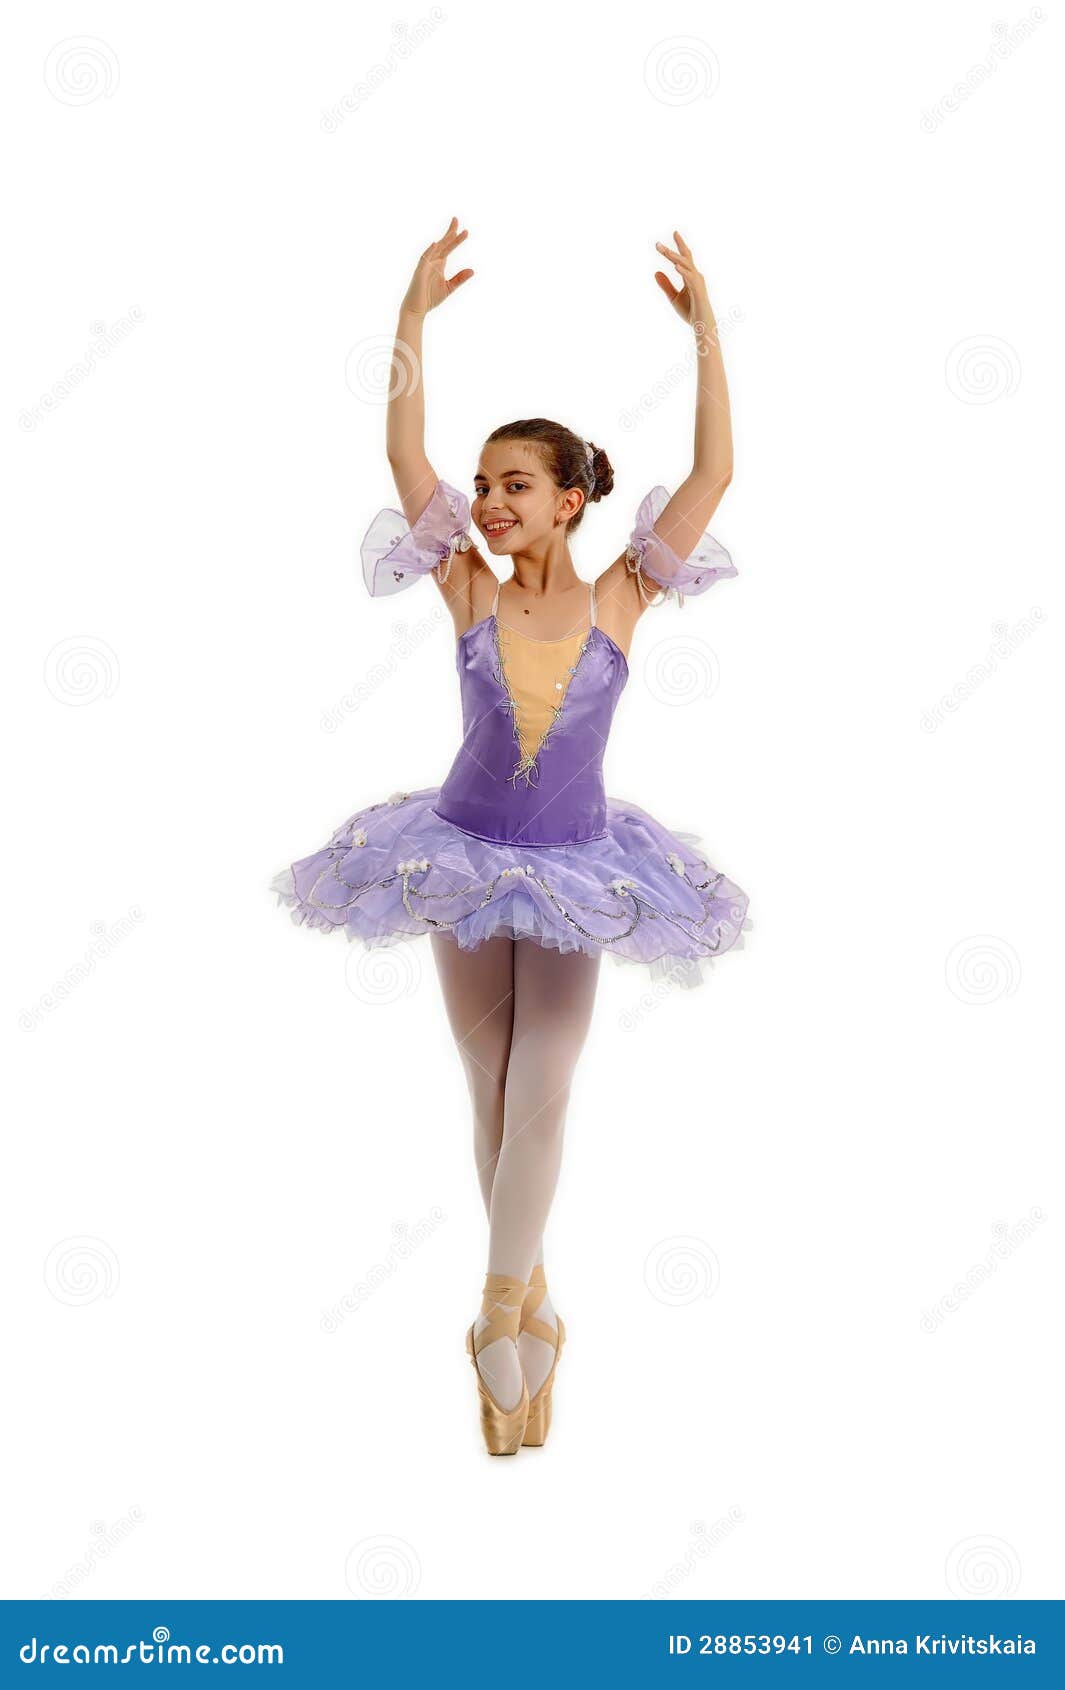 Young ballerina stock photo. Image of arts, females, ballerina - 29221122